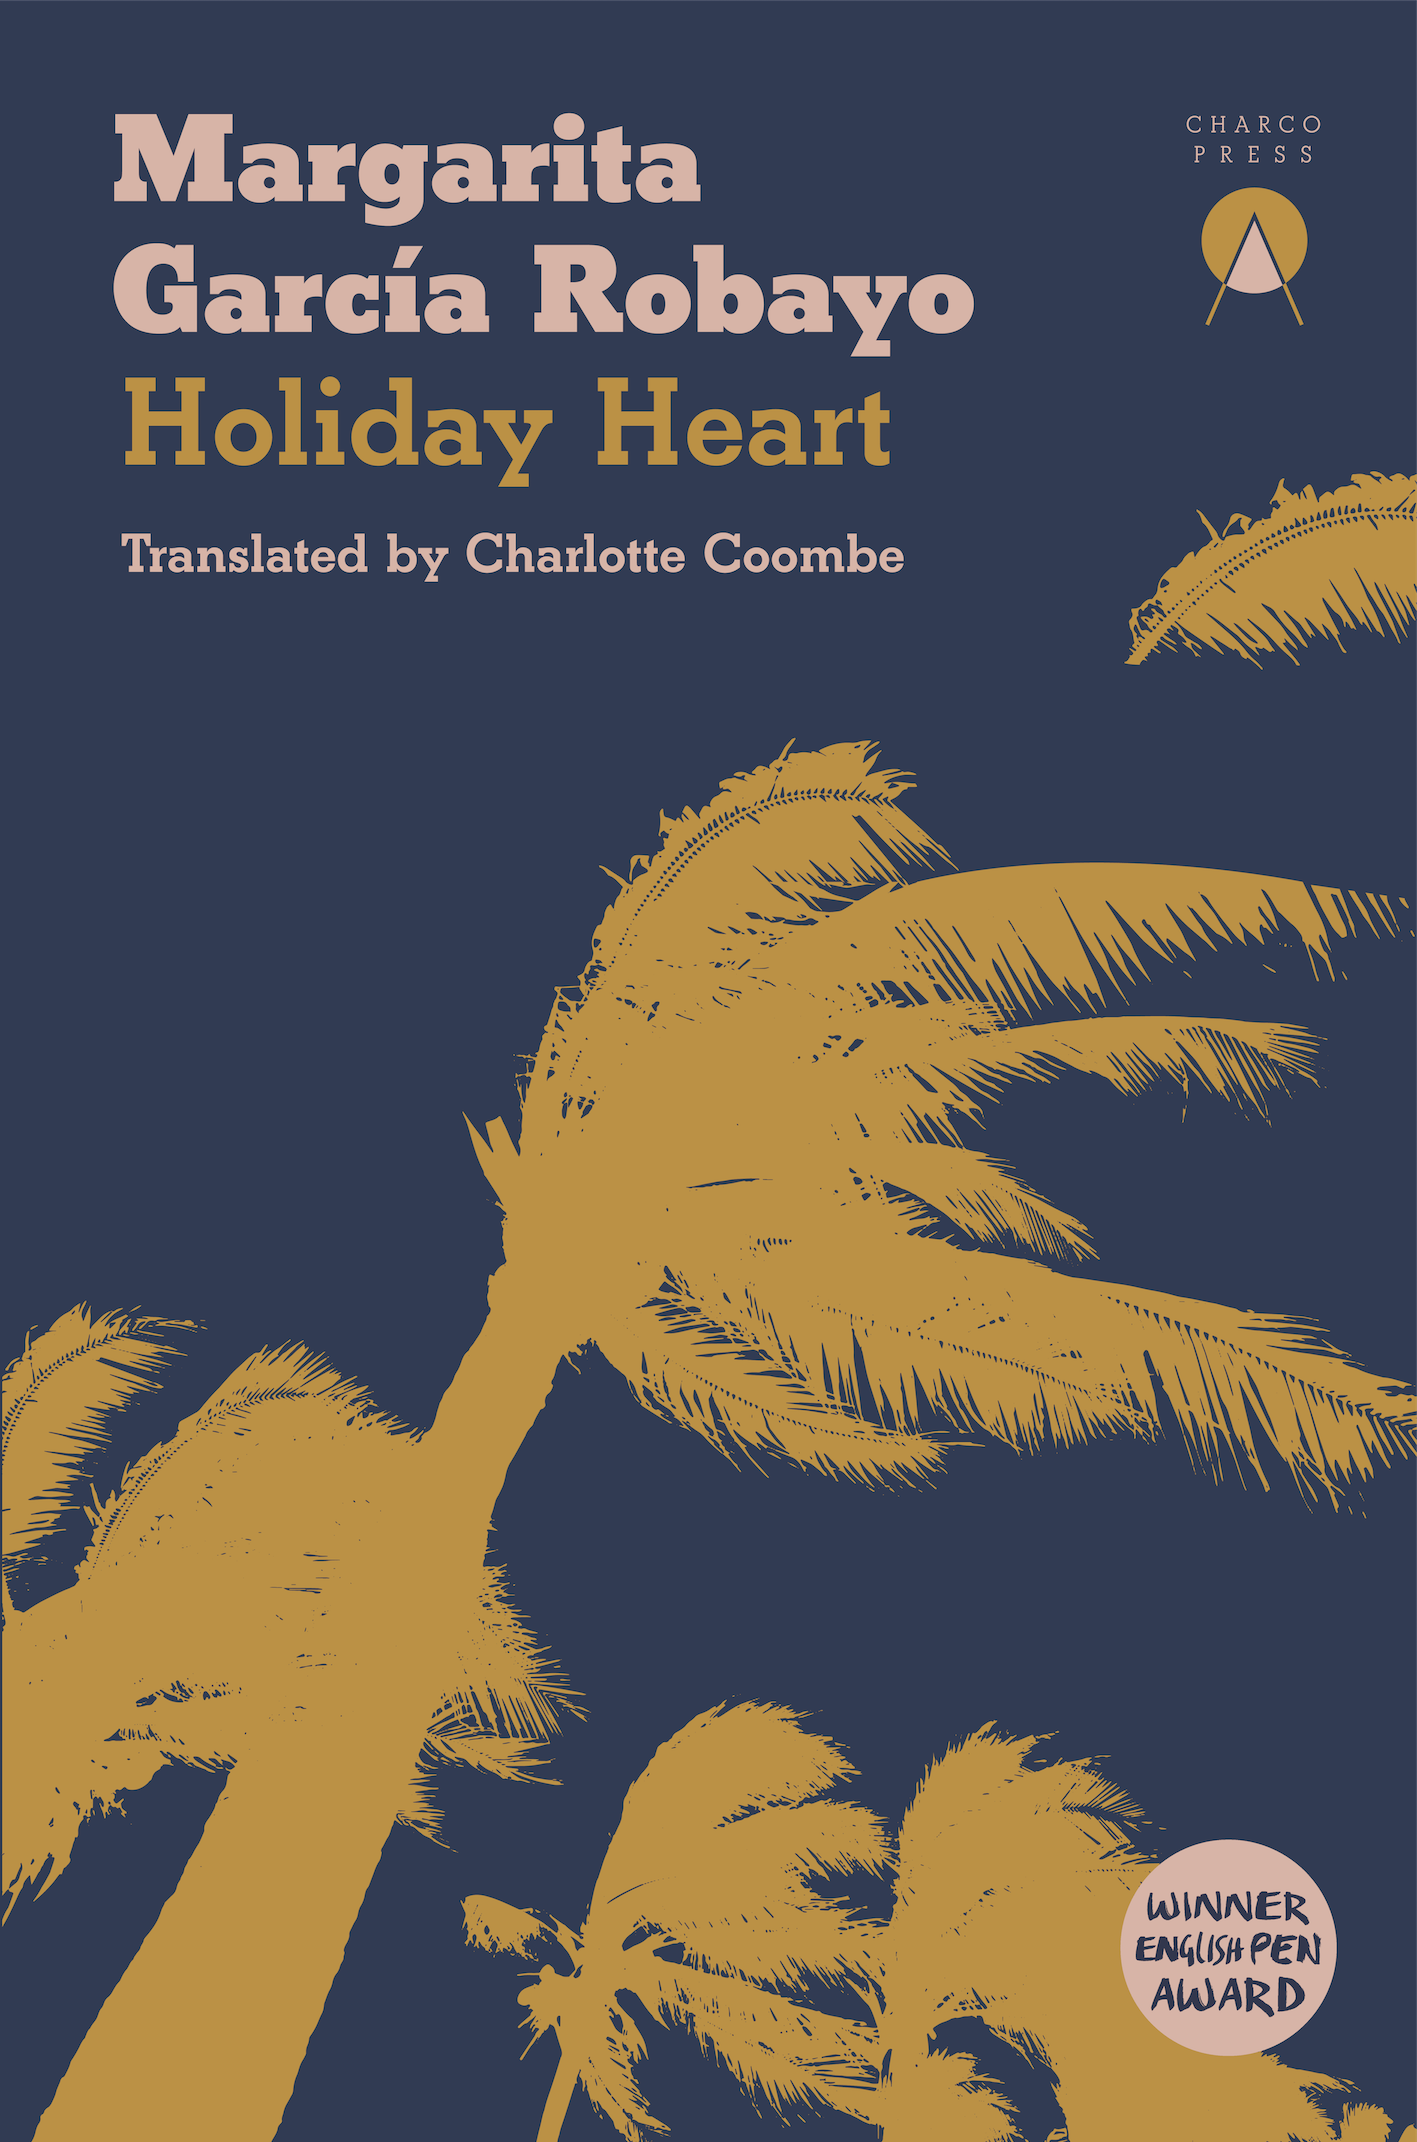 Holiday Heart by Margarita García Robayo translated by Charlotte Coombe